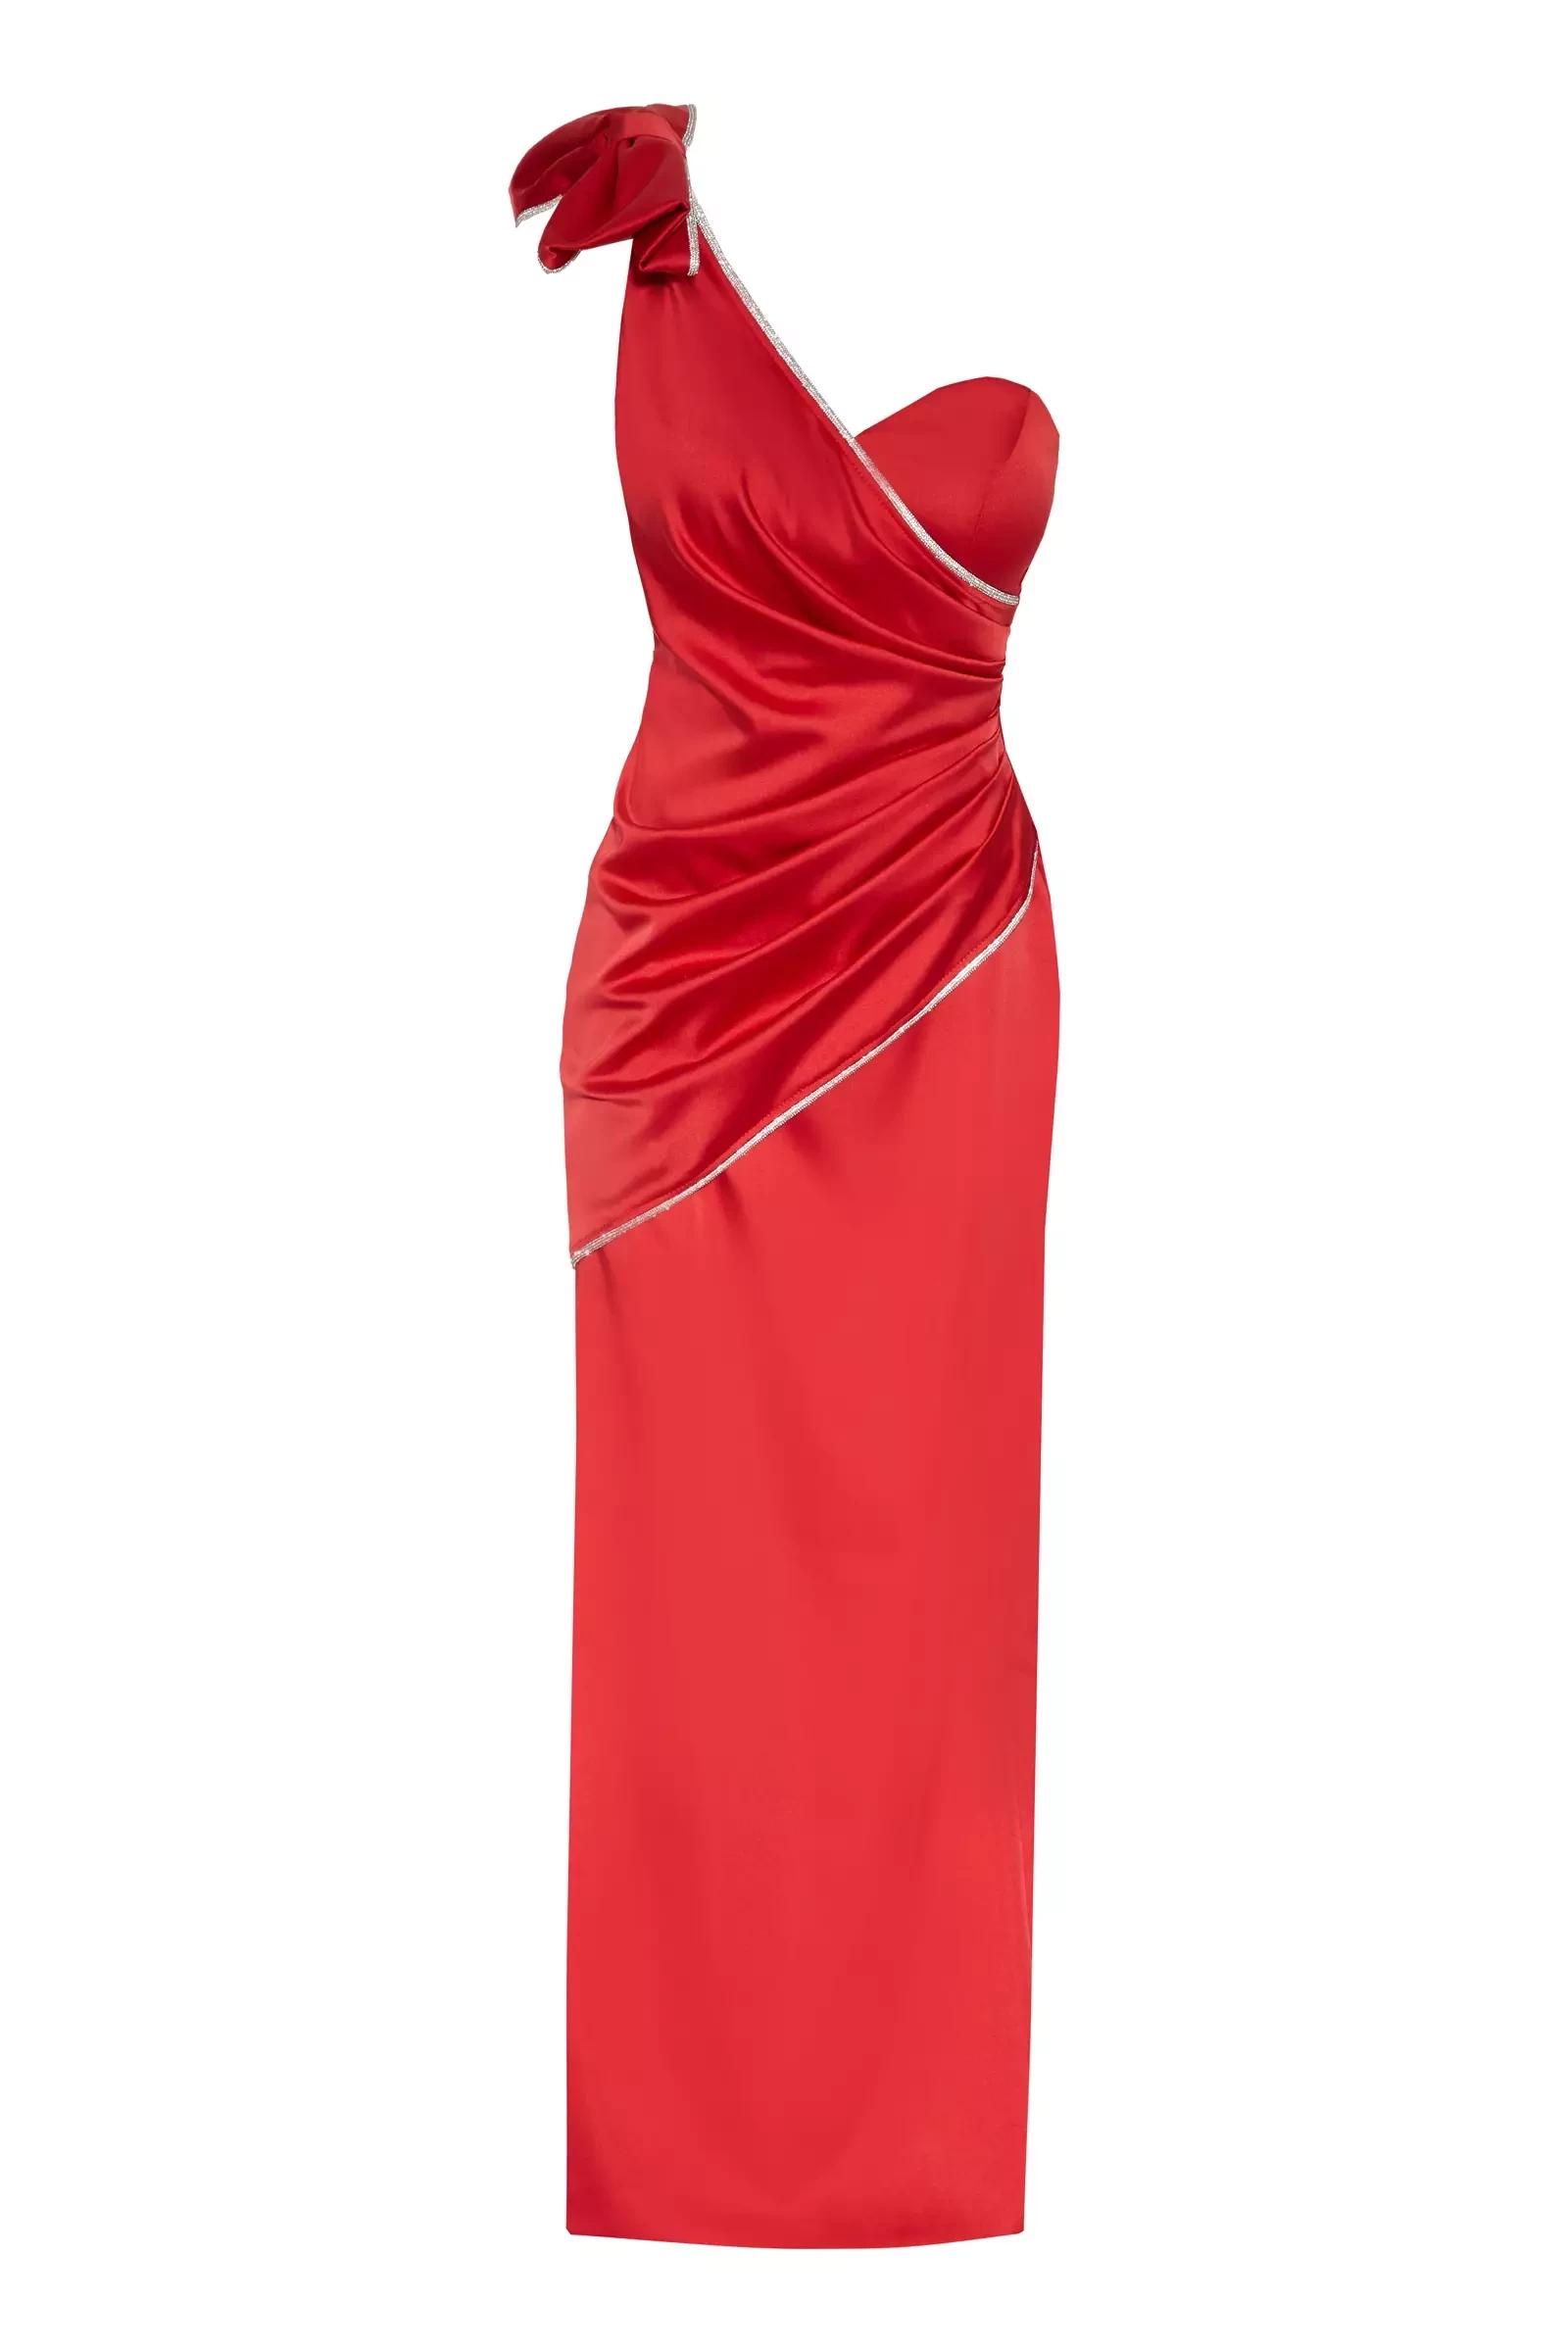 Red satin one arm maxi dress